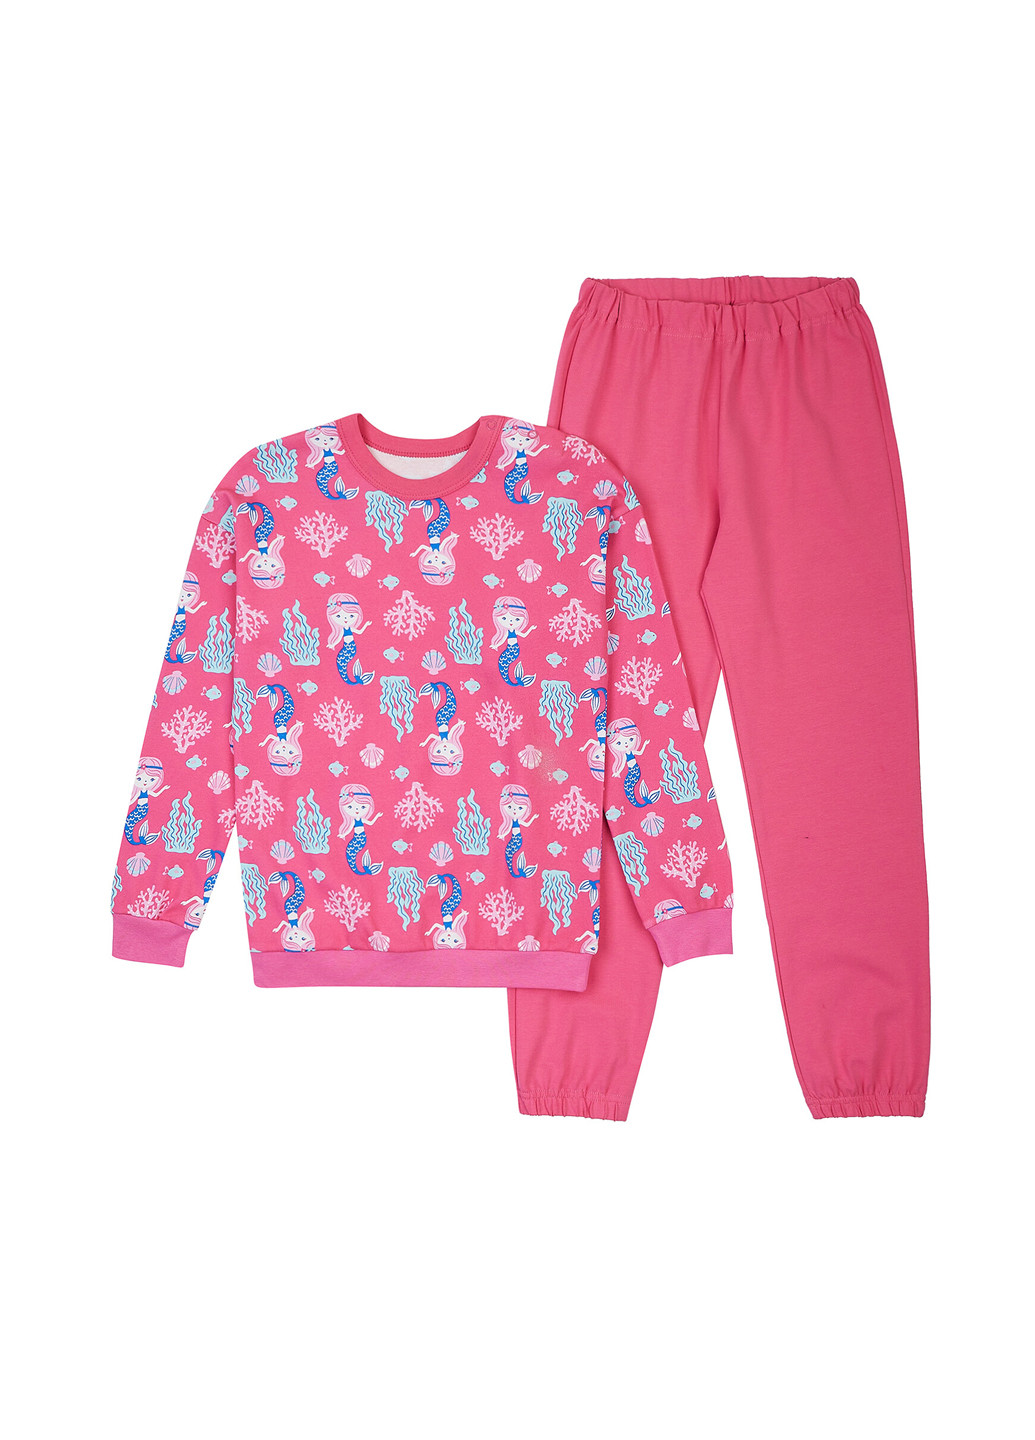 Малиновая всесезон пижама (свитшот, брюки) свитшот + брюки Ляля